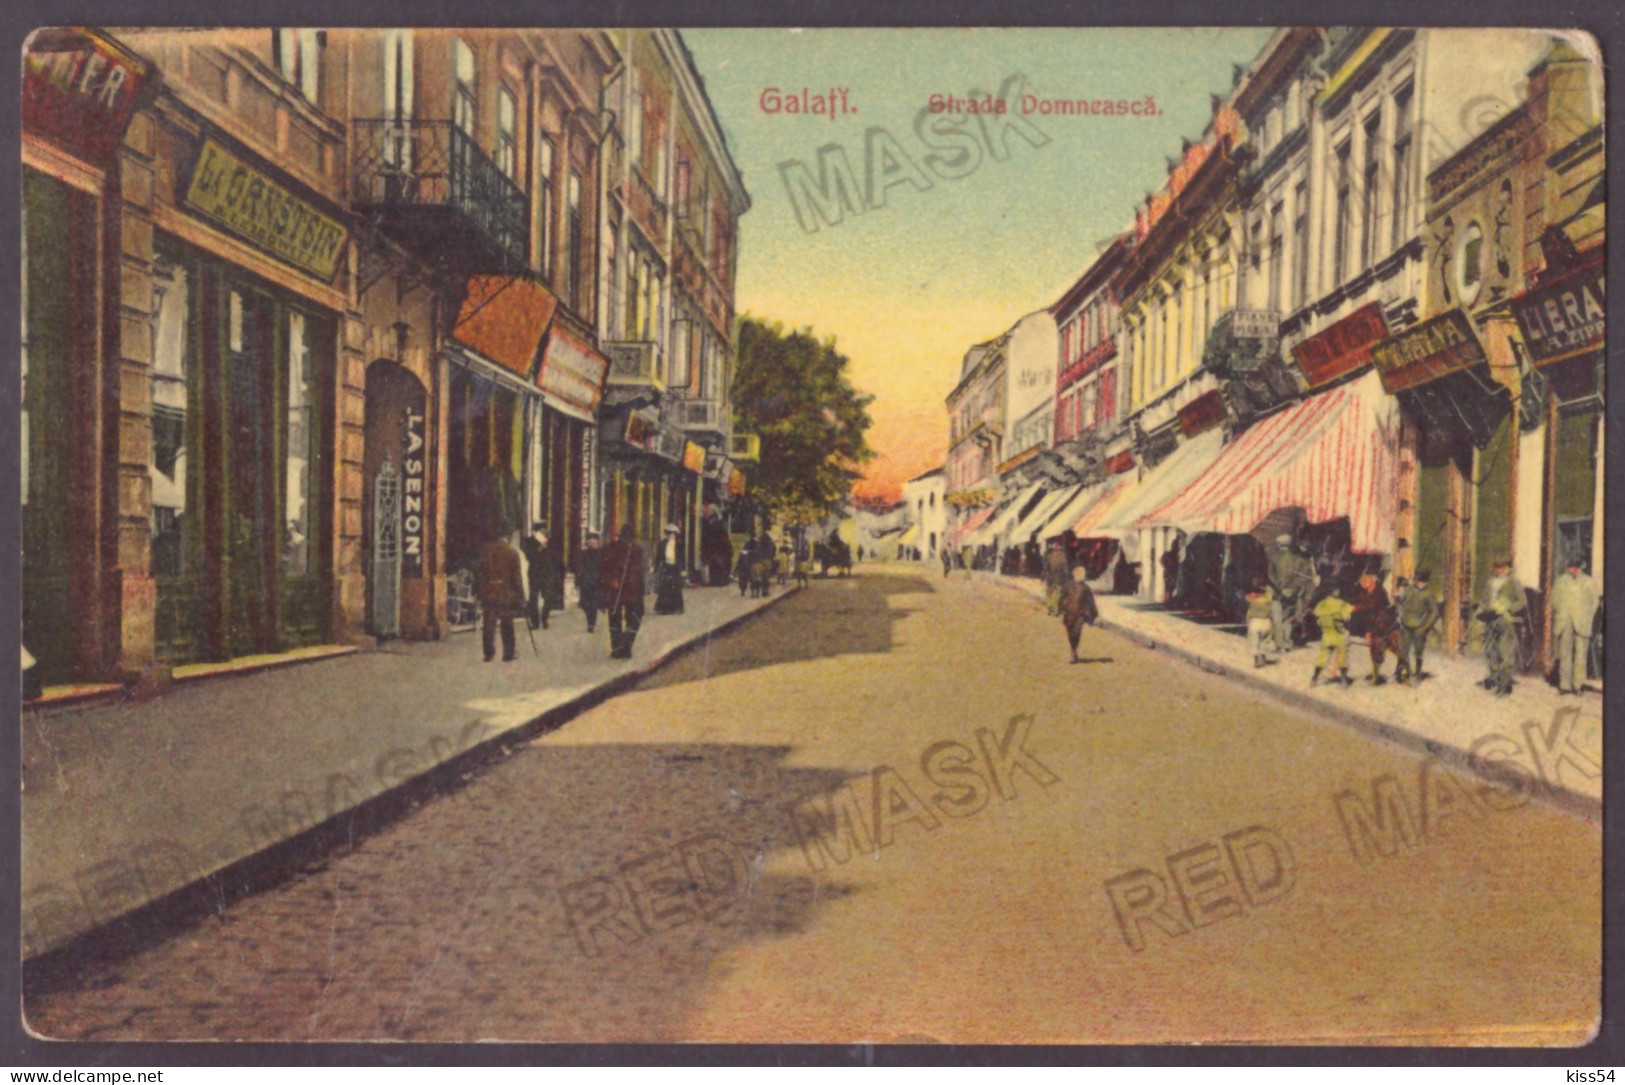 RO 40 - 23917 GALATI, Street Stores, Romania - Old Postcard - Used - 1911 - Roemenië